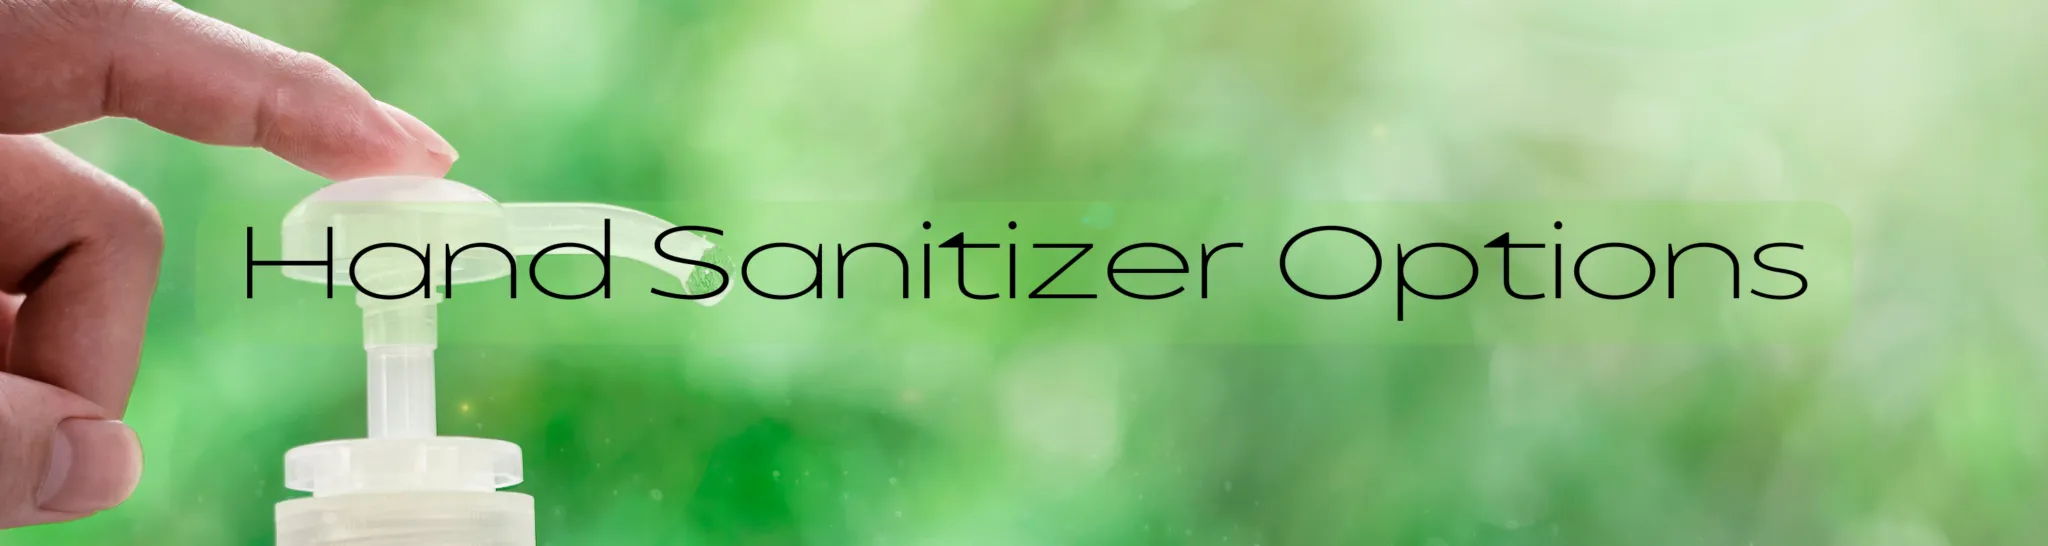 Hand Sanitizer Options Banner 2048x546